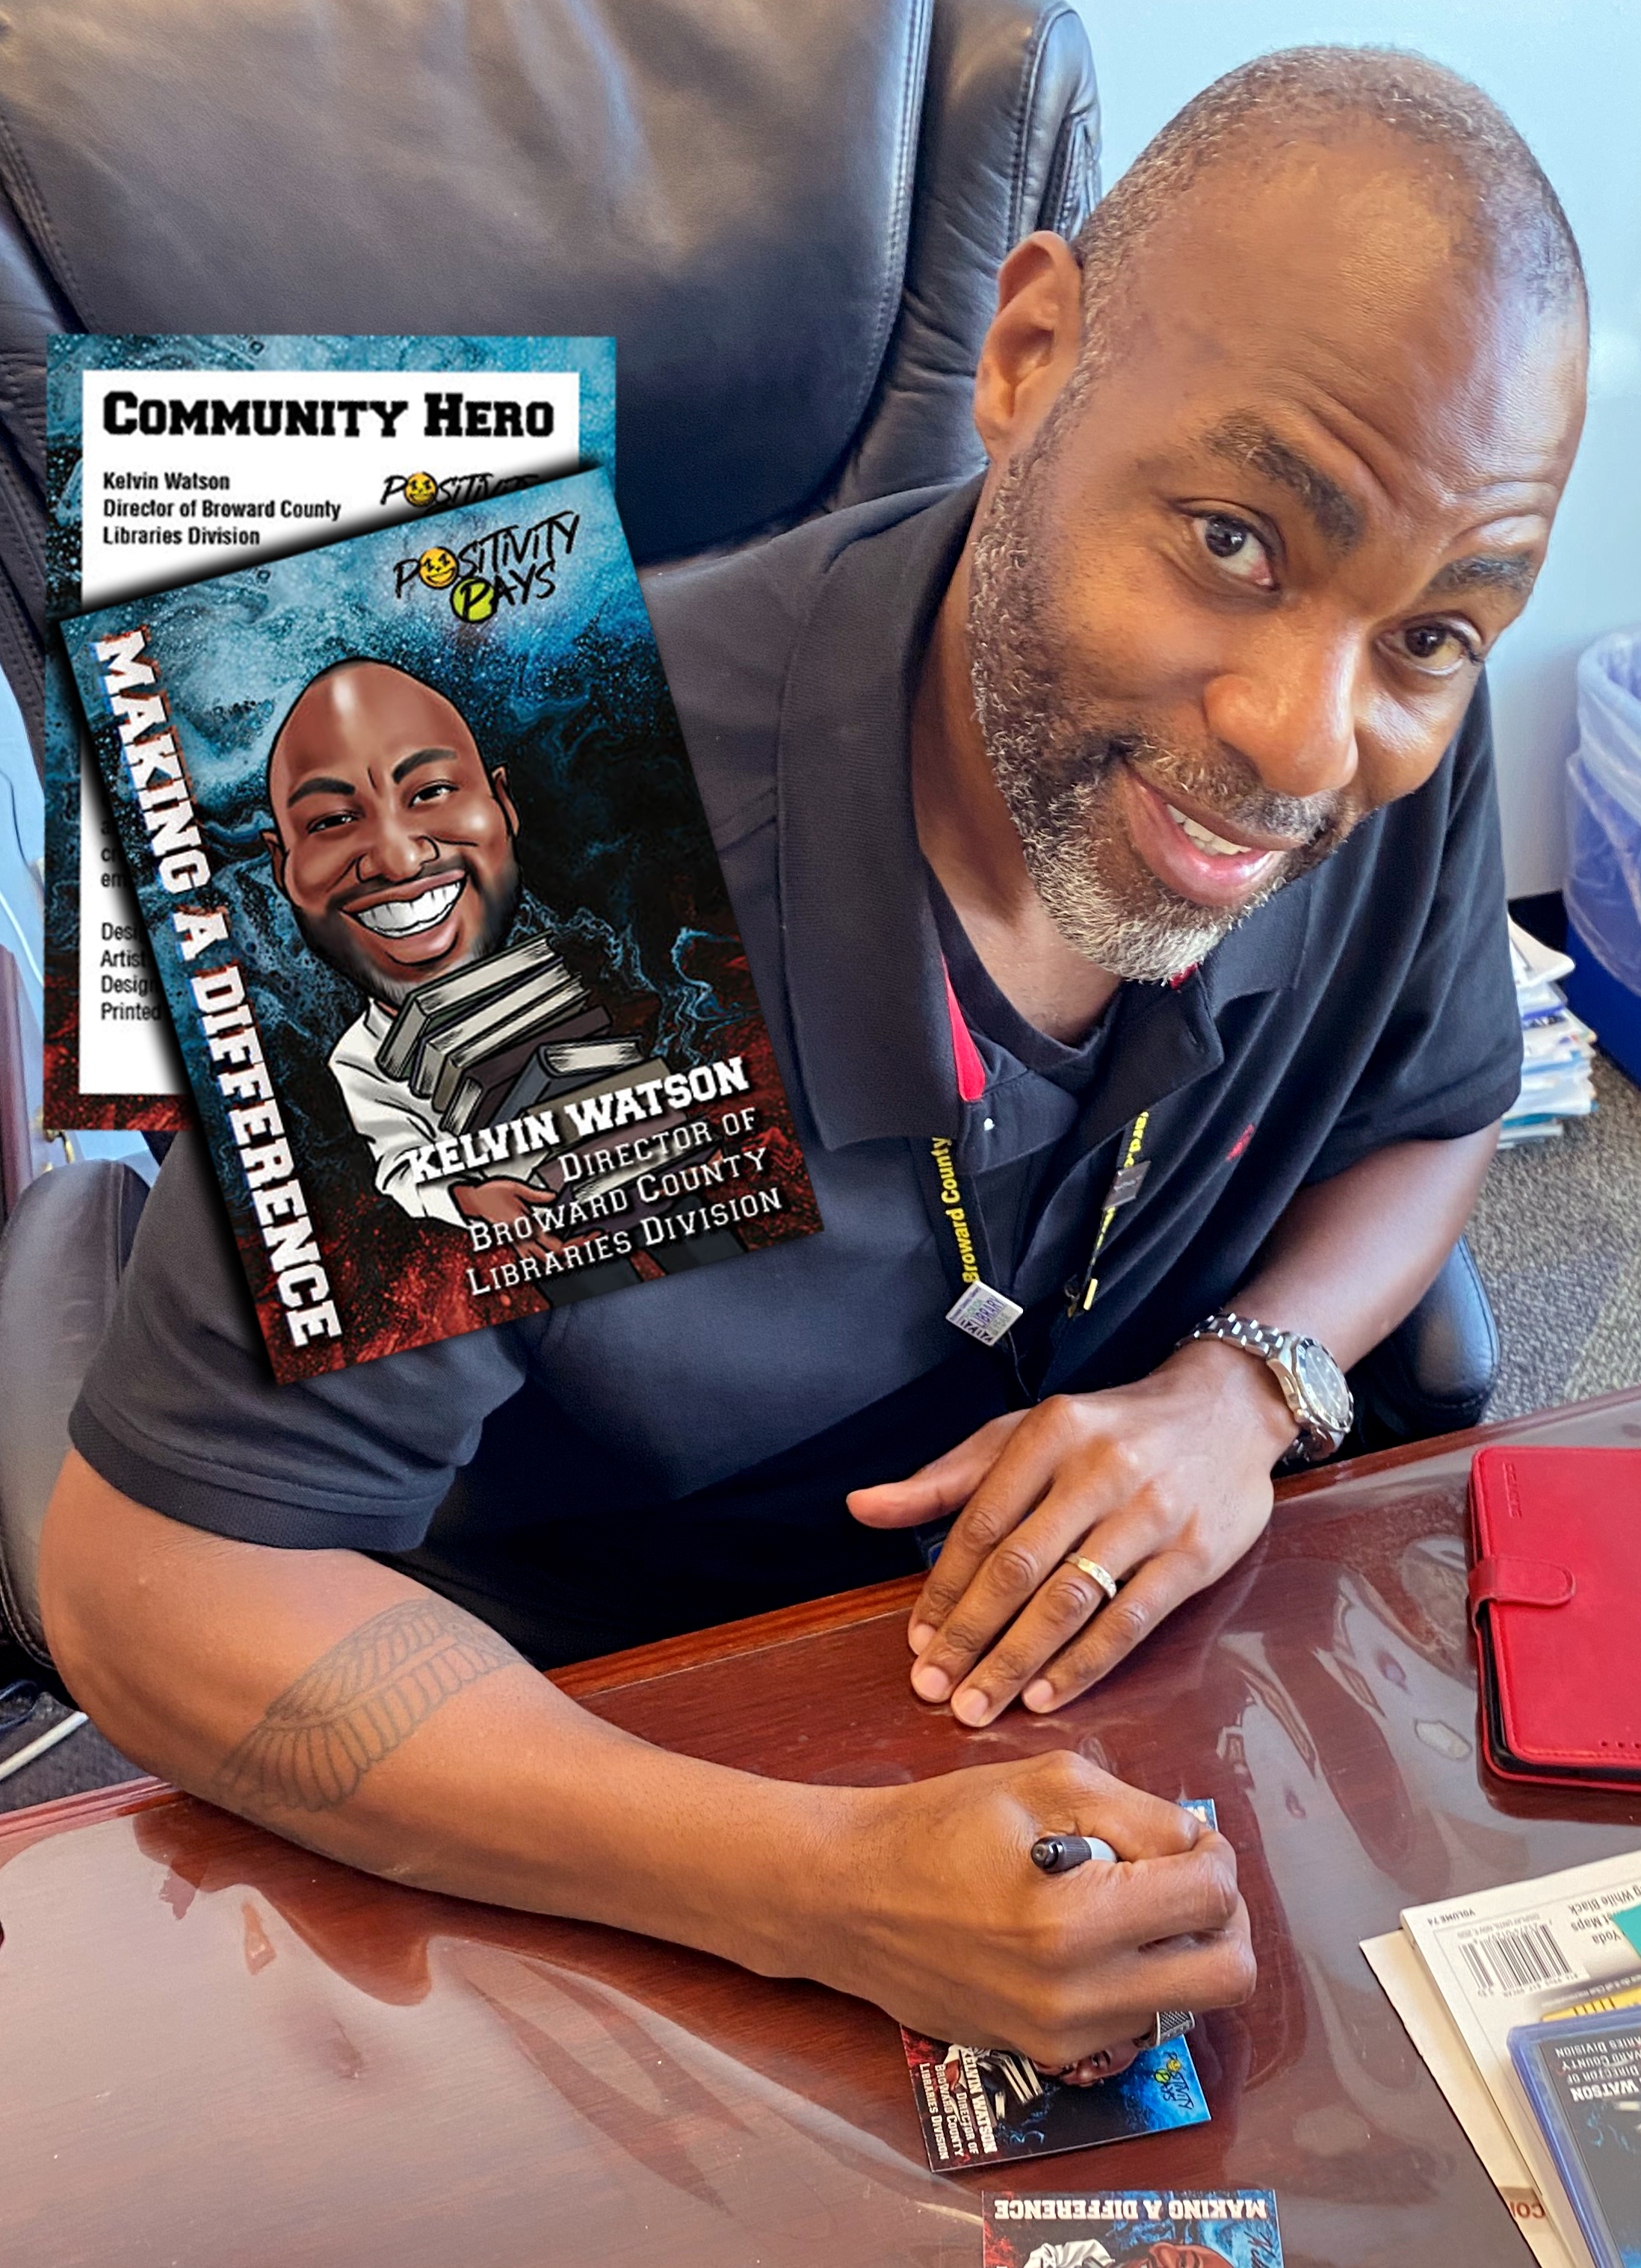 Broward County Library Director Kelvin Watson signs his Community Hero Trading Card.